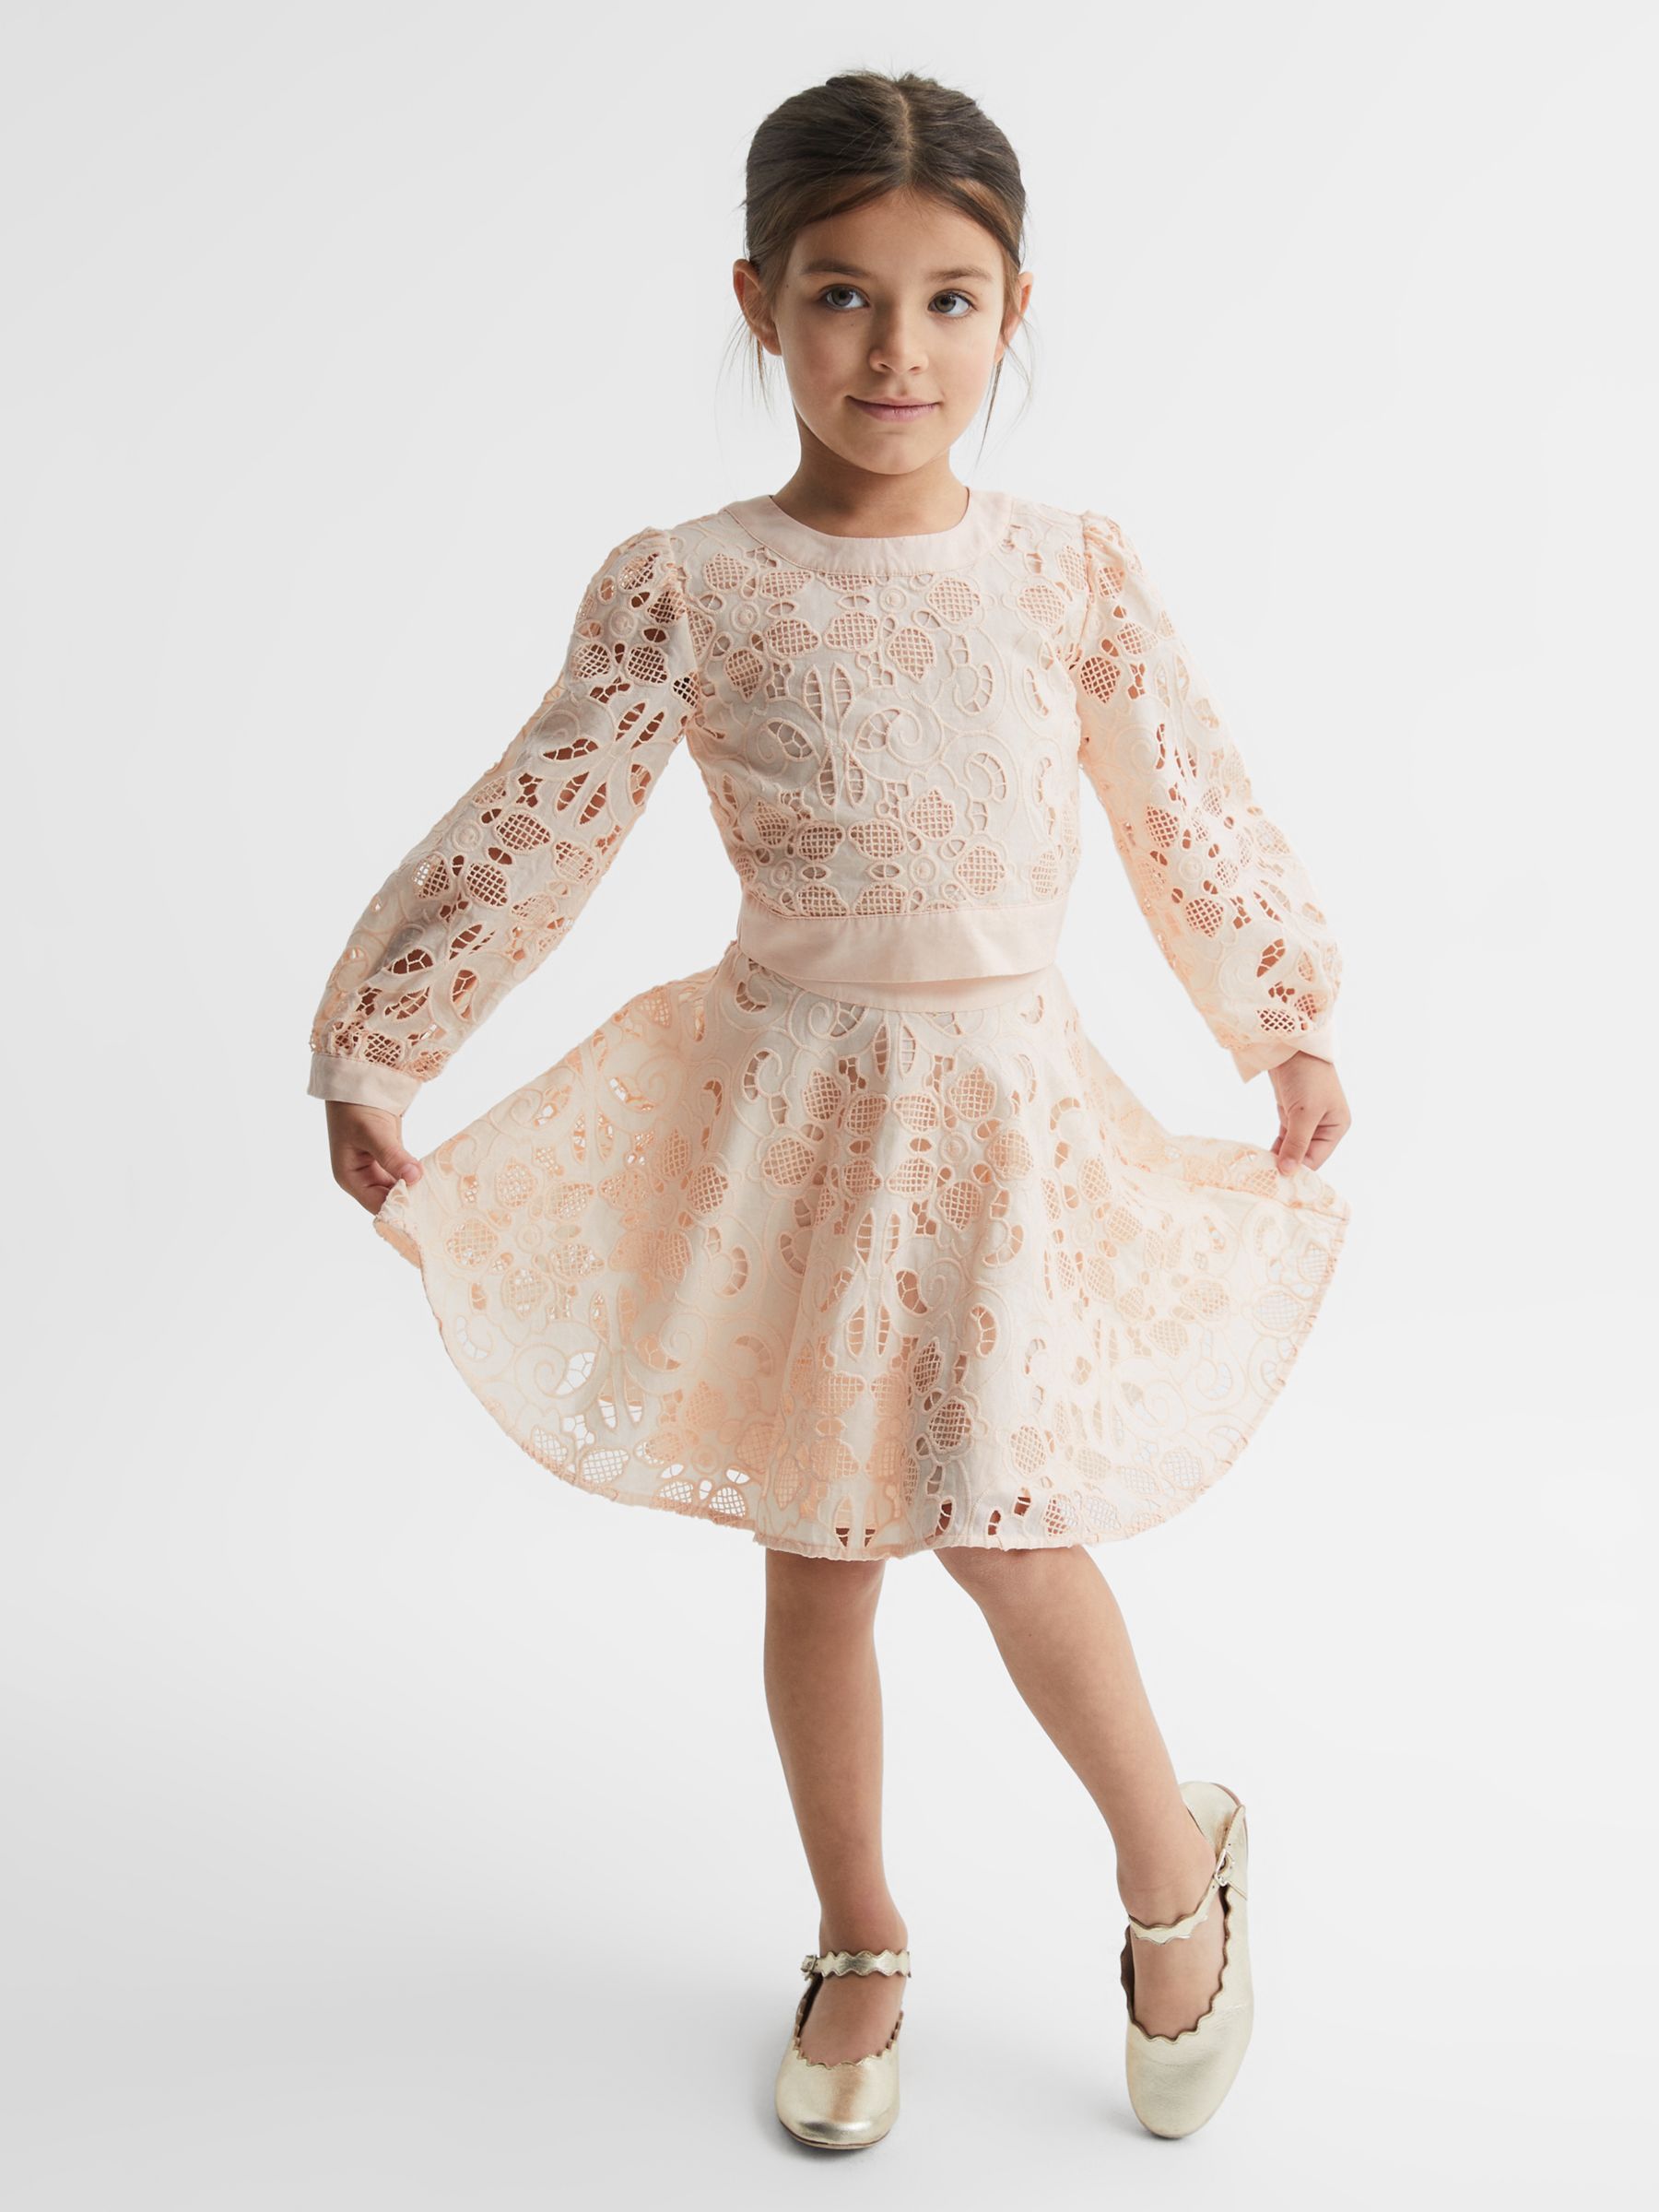 Reiss Kids' Nella Cotton Lace Mini Skirt, Pink, 4-5 years